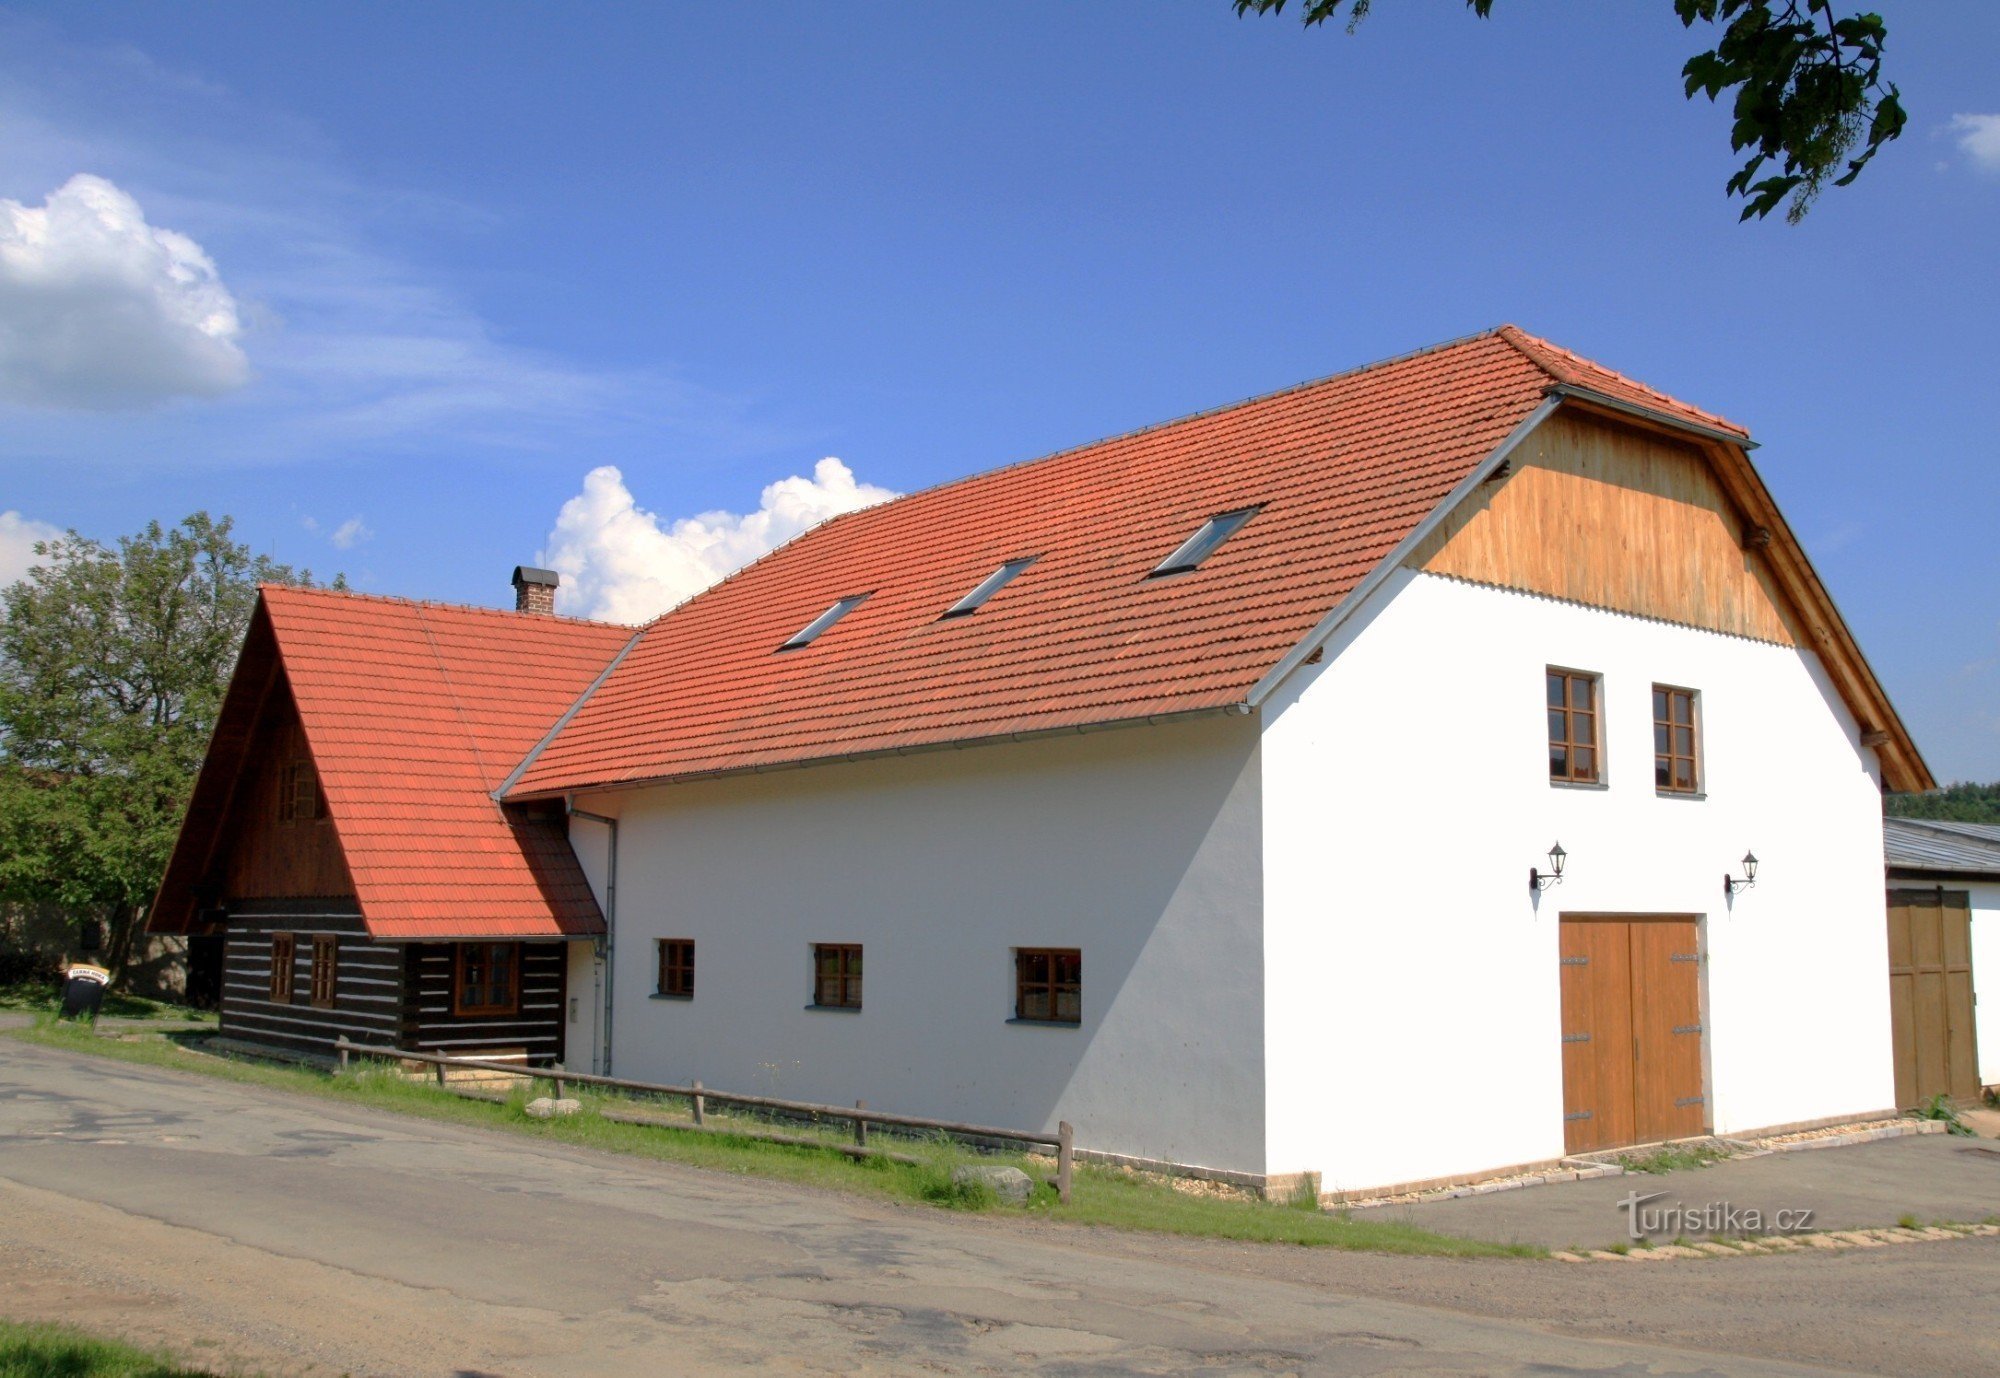 Horní Smržov - μουσείο λαϊκής αρχιτεκτονικής